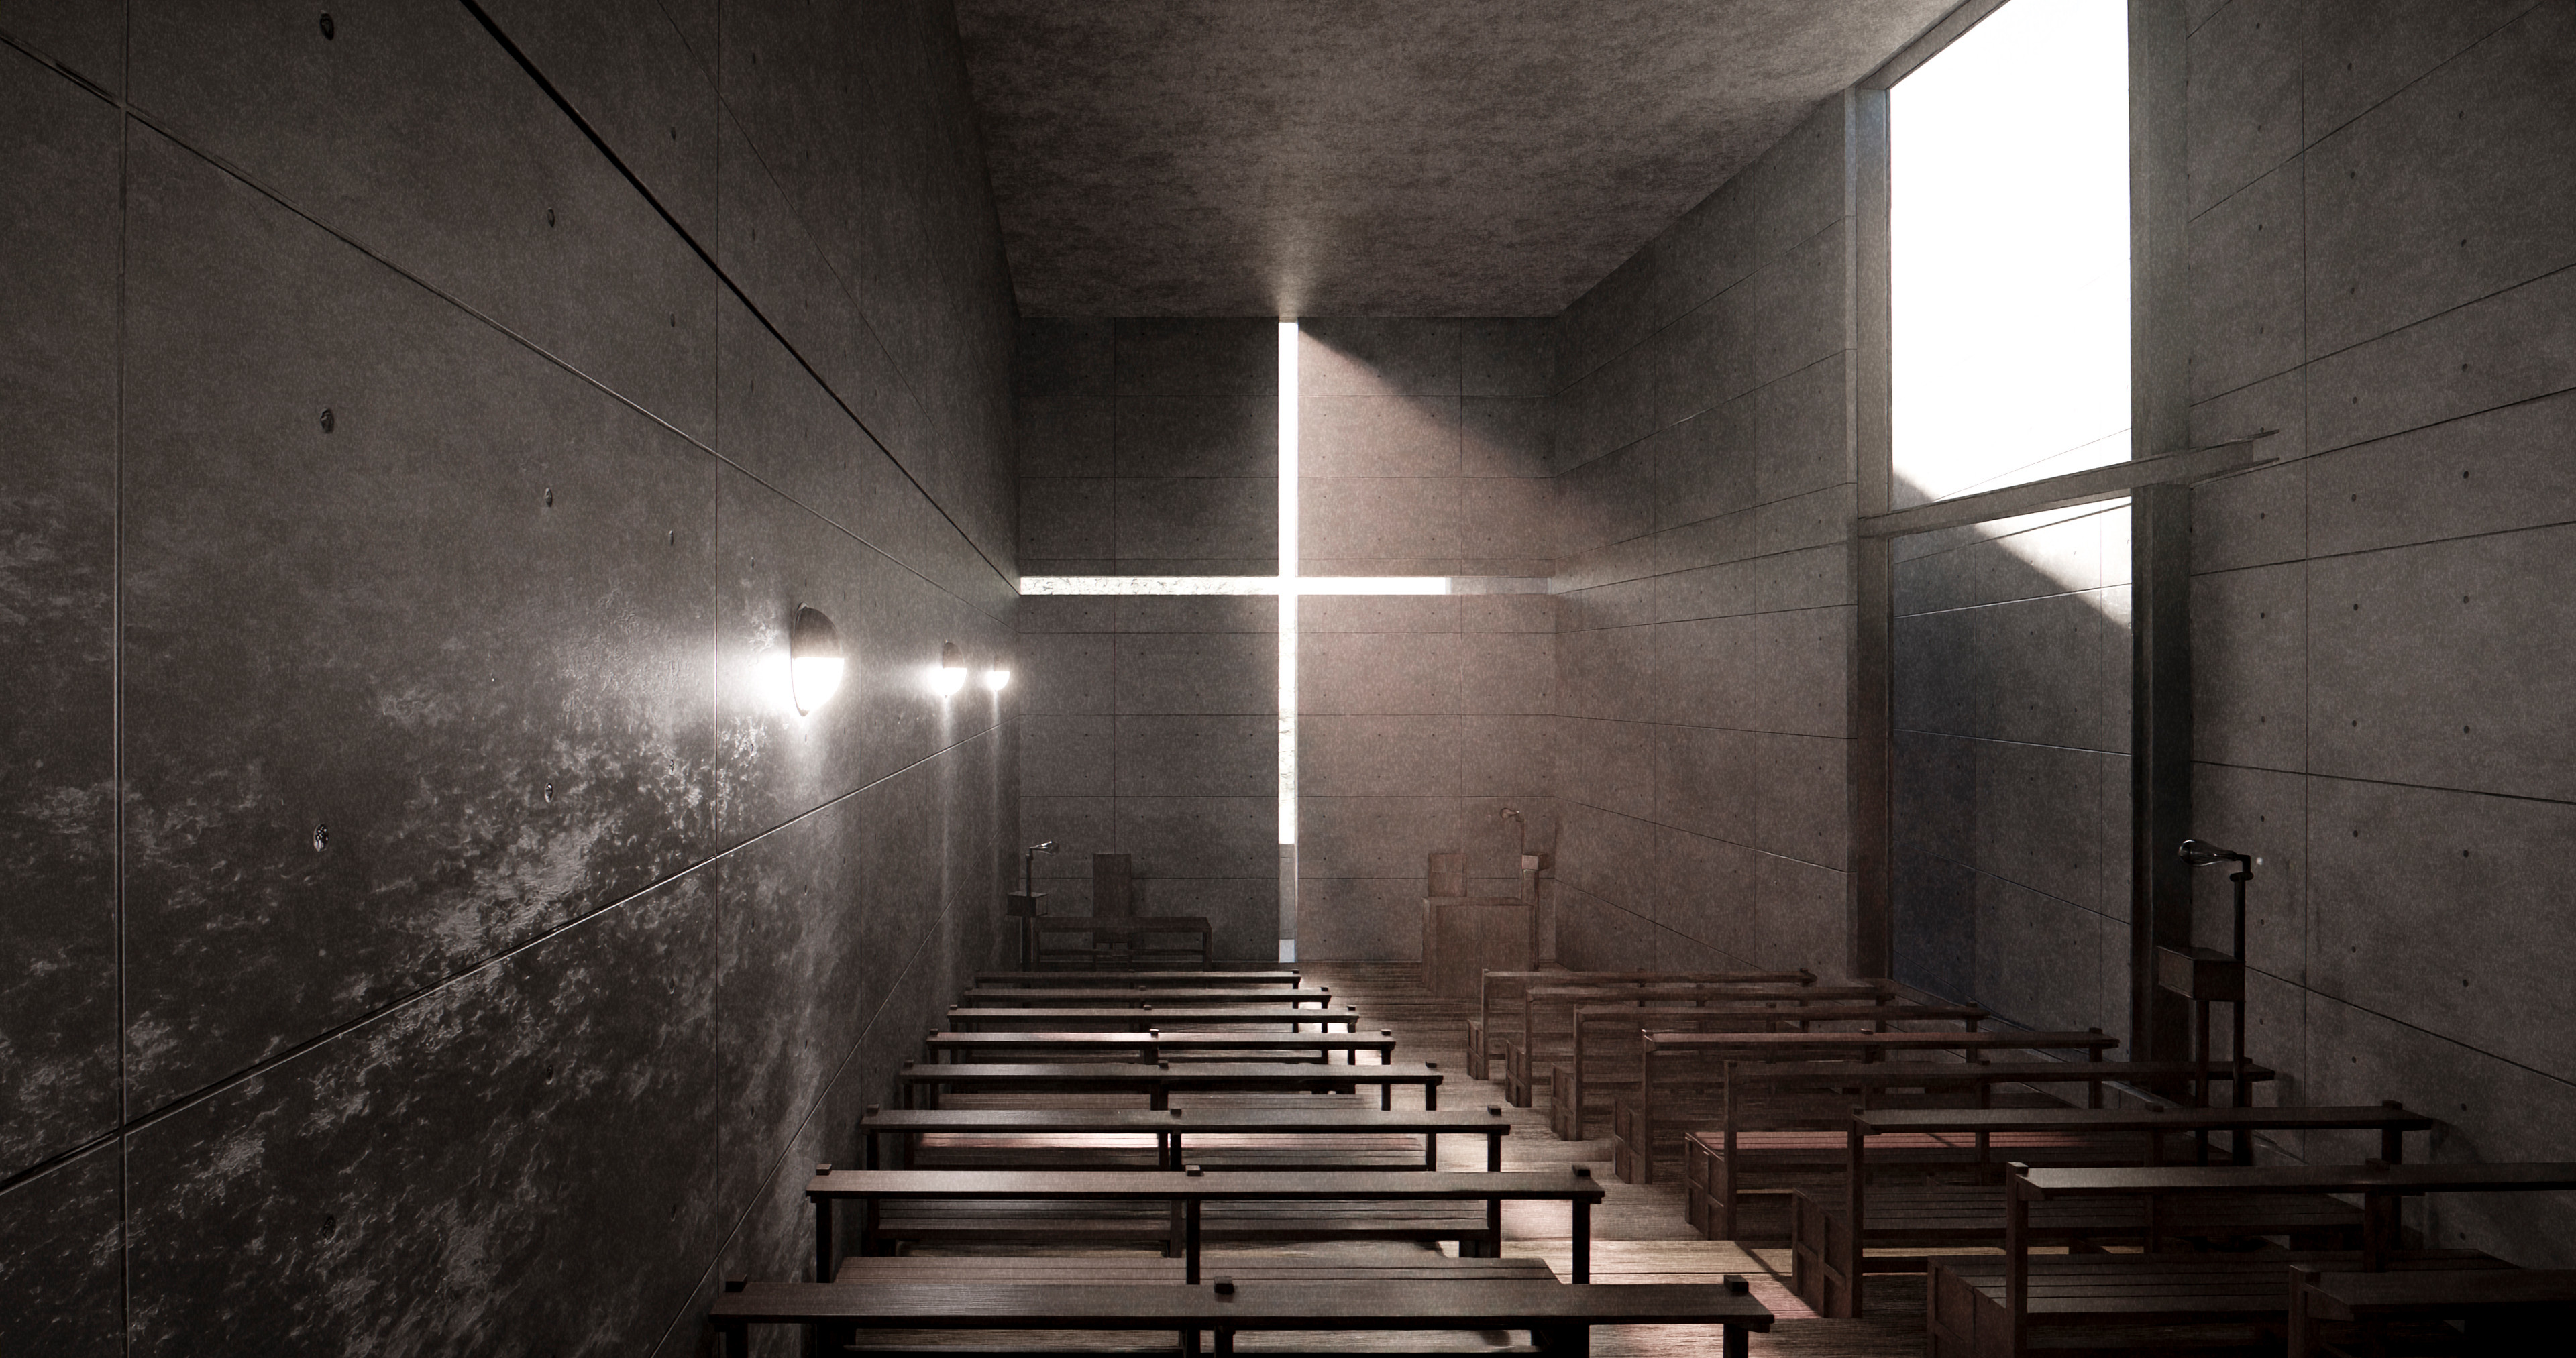 The Church of Light - Tadao Ando (1989)